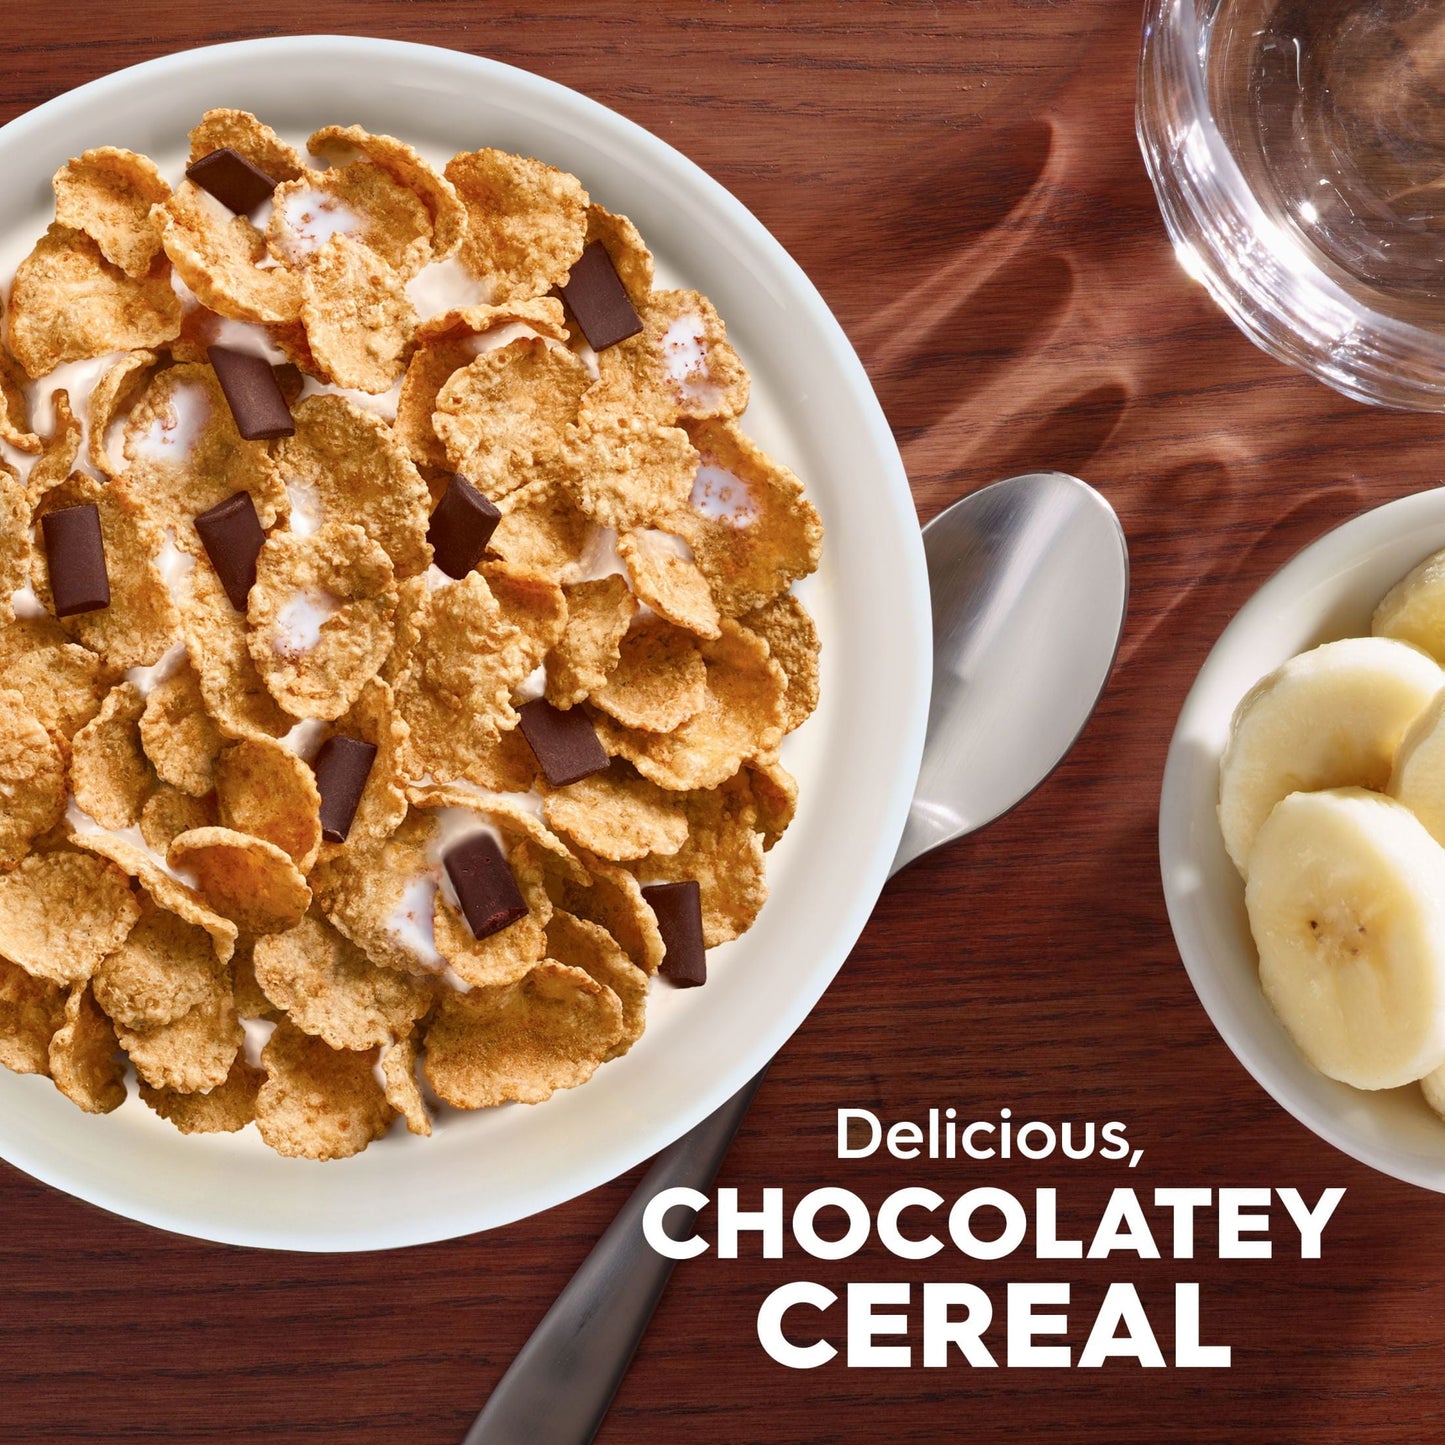 Kellogg's Special K Chocolatey Delight Breakfast Cereal, Family Size, 18.5 oz Box